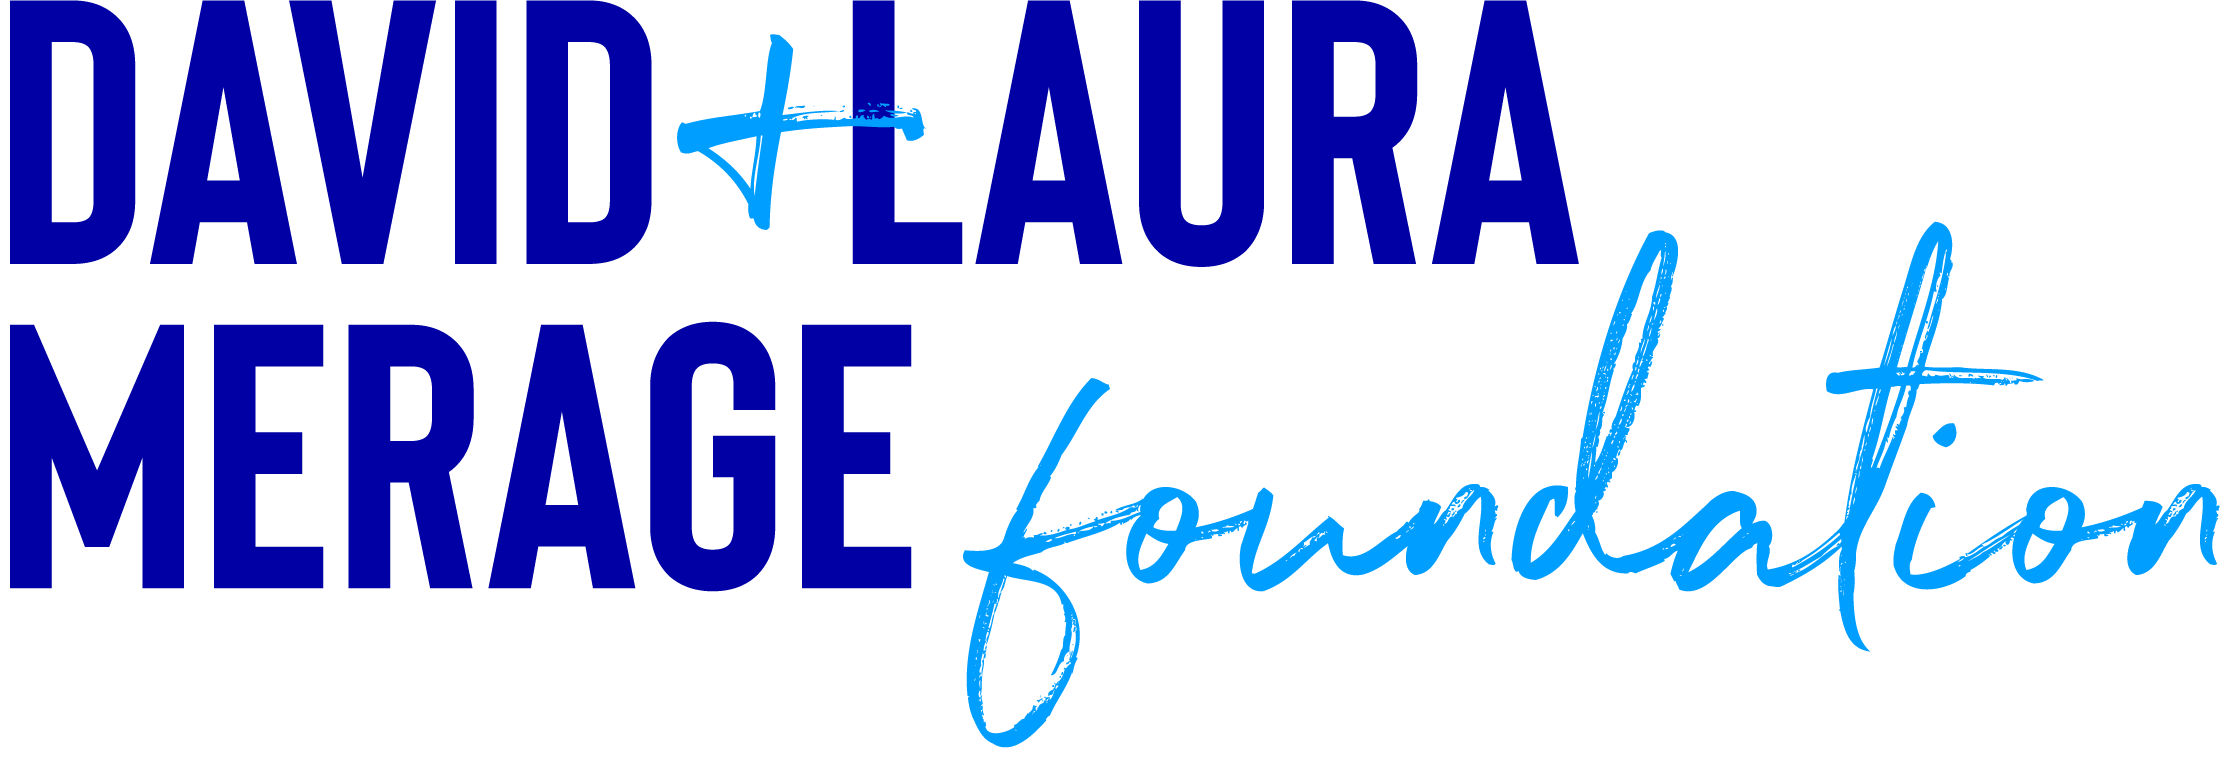 David and Laura Merage Foundation Logo